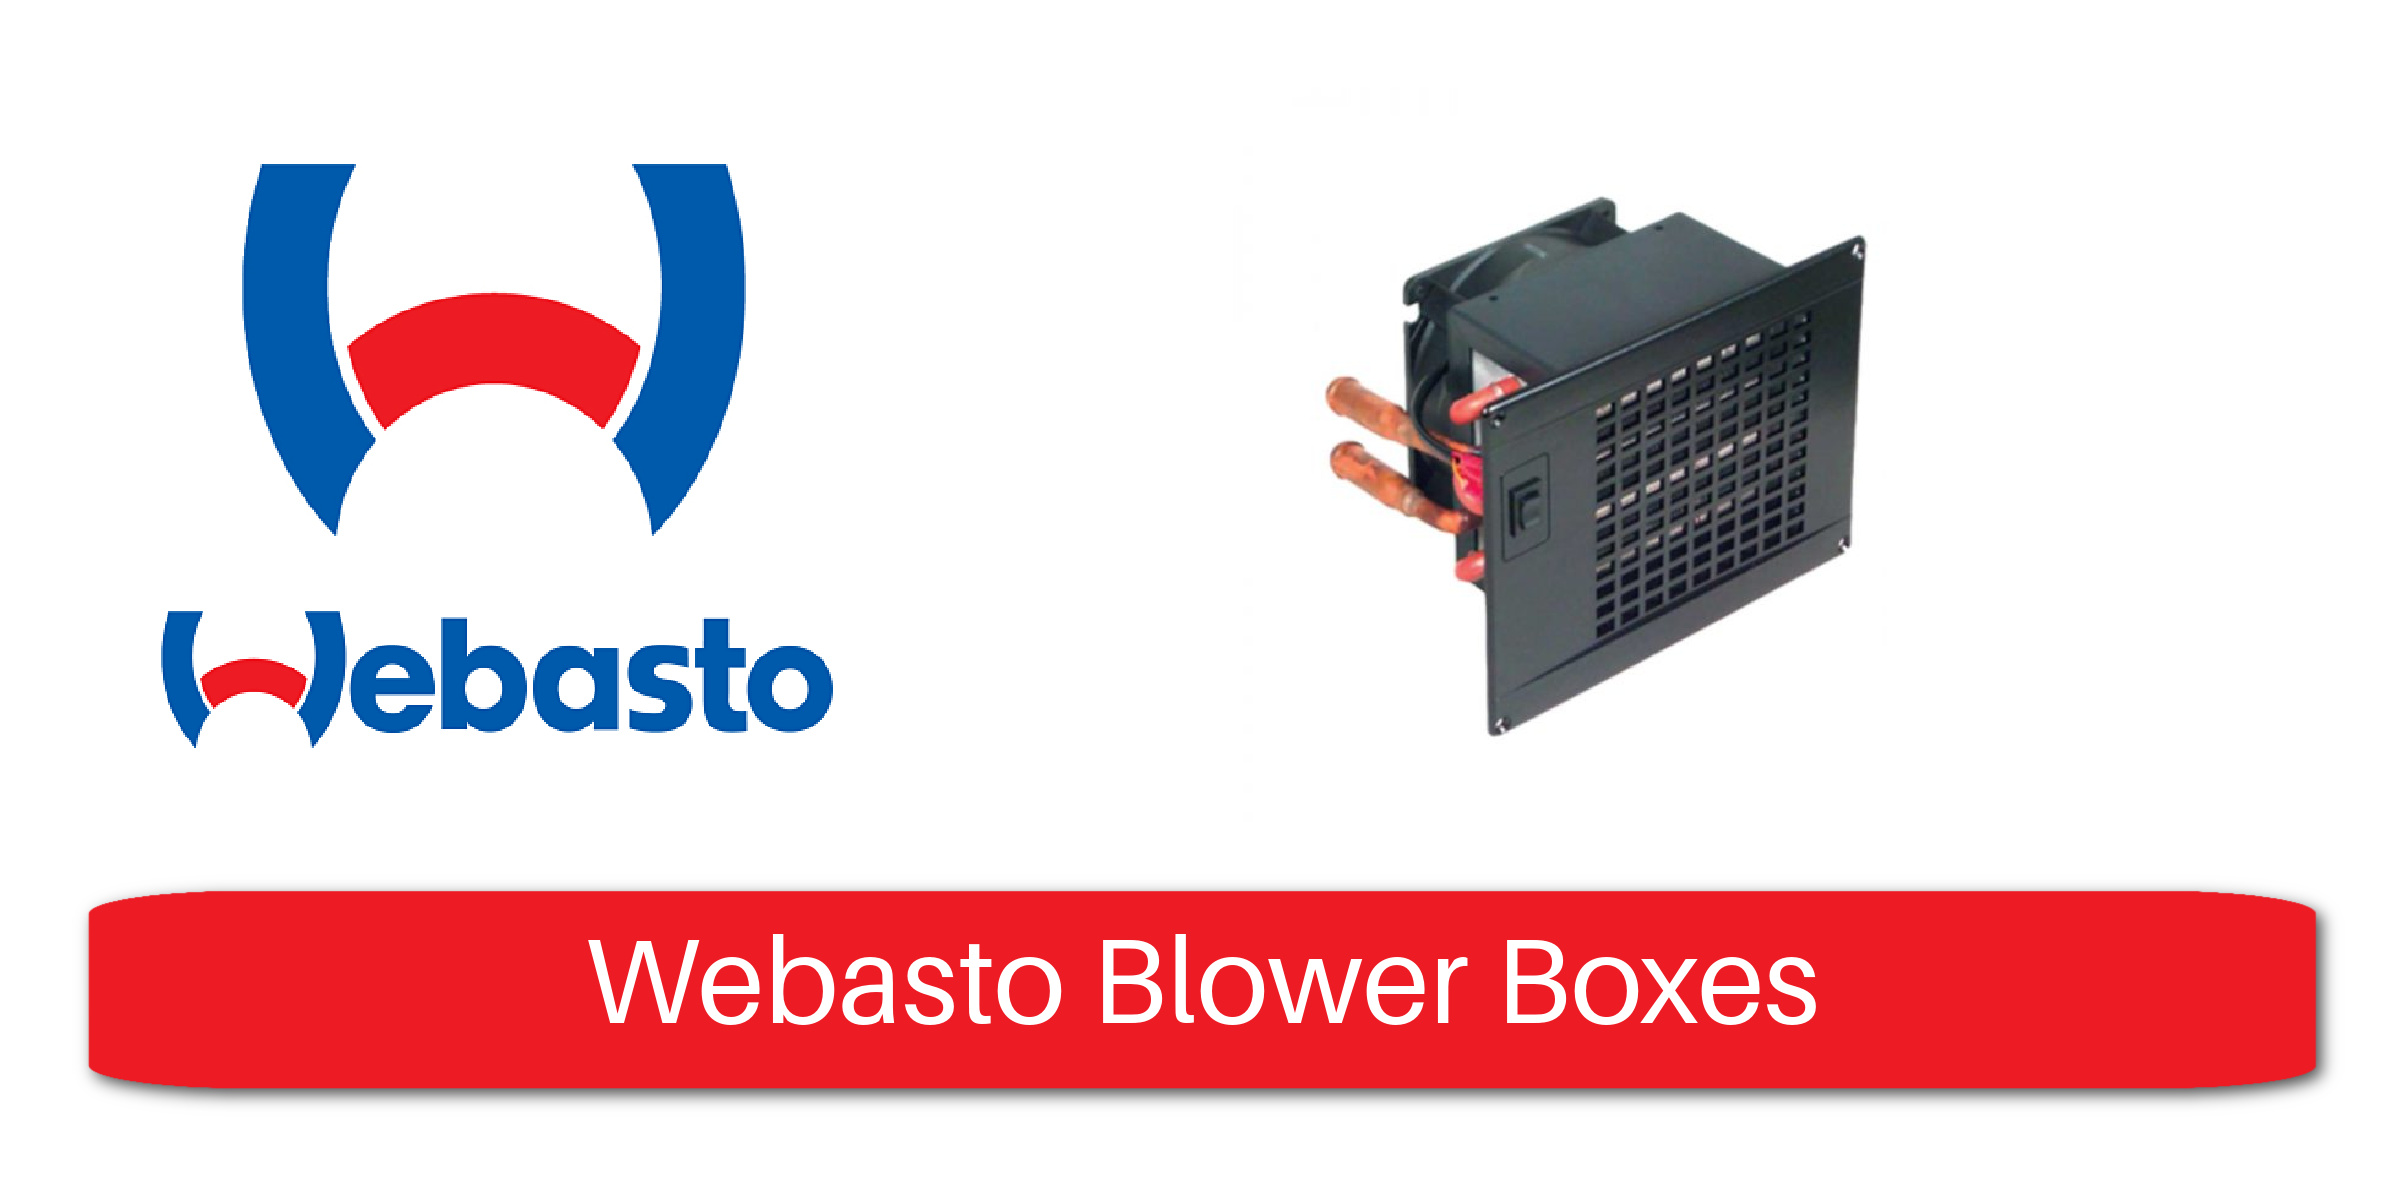 Webasto Blower Boxes